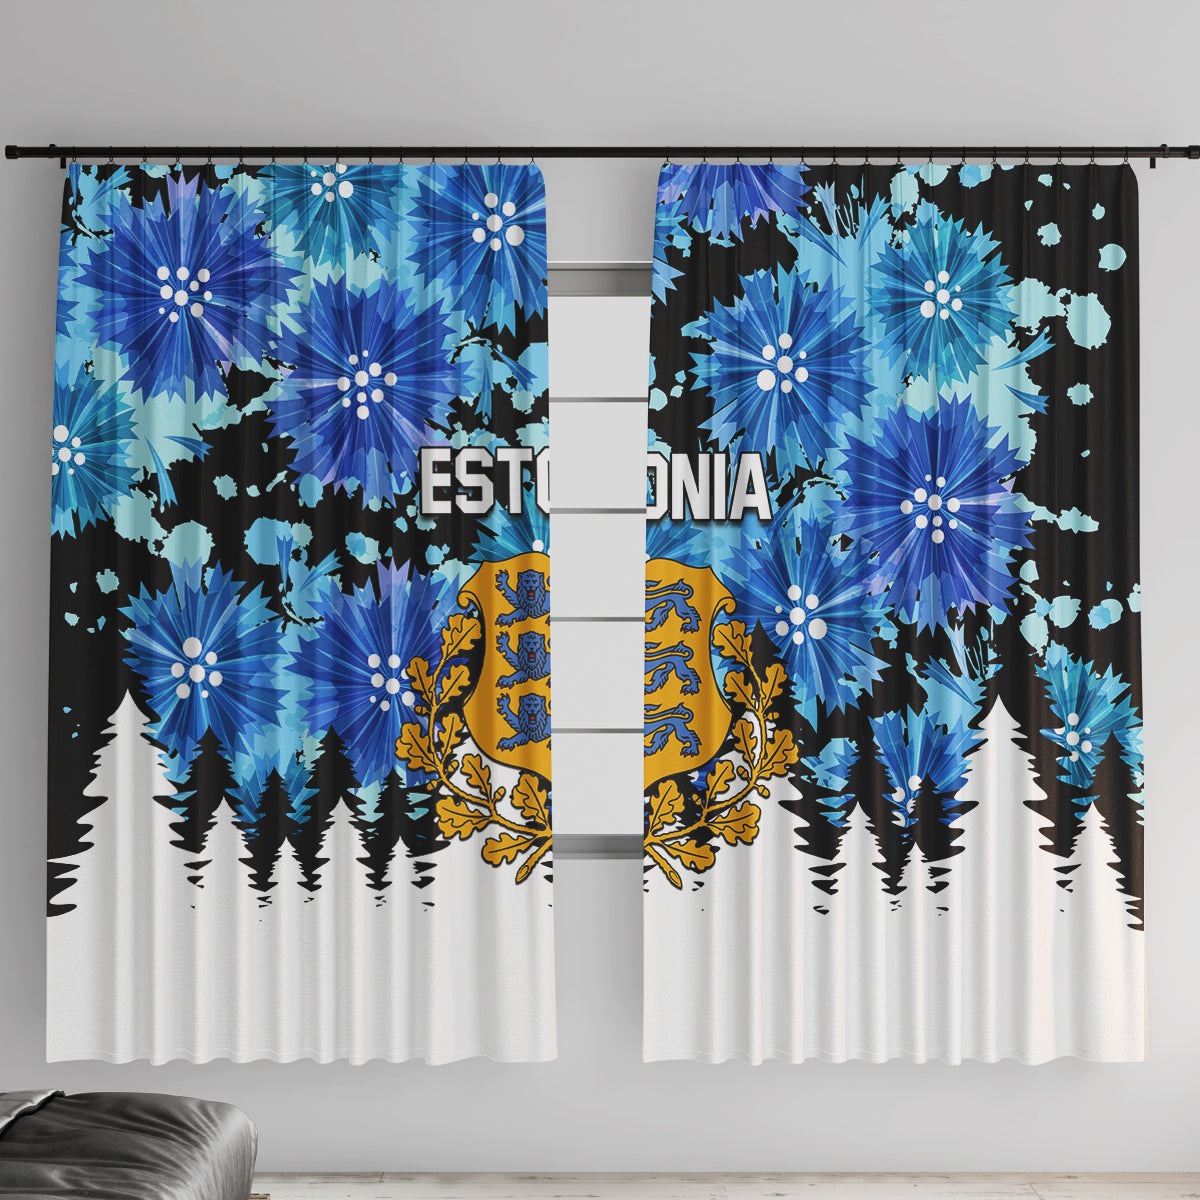 Estonia Independence Day Window Curtain Cornflower Unique Style